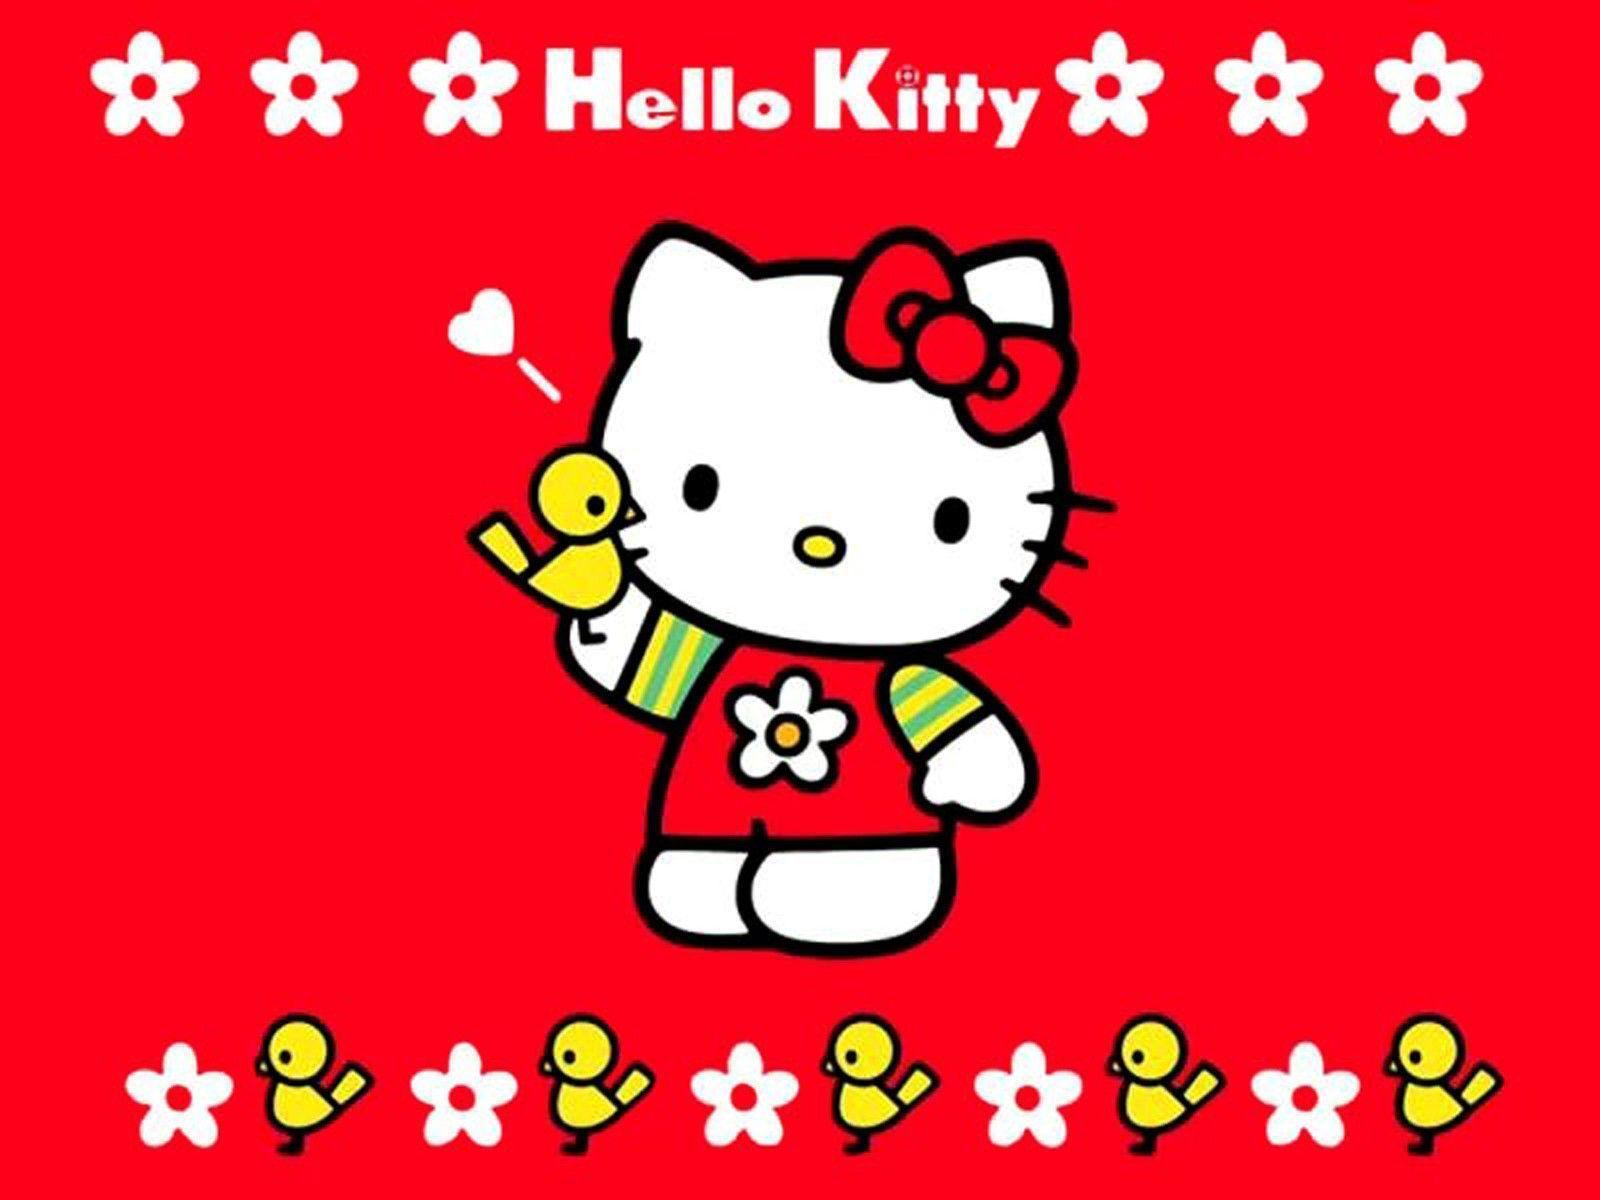 20 Cute Hello Kitty Wallpaper Ideas  Pink Dotty Background  Idea  Wallpapers  iPhone WallpapersColor Schemes